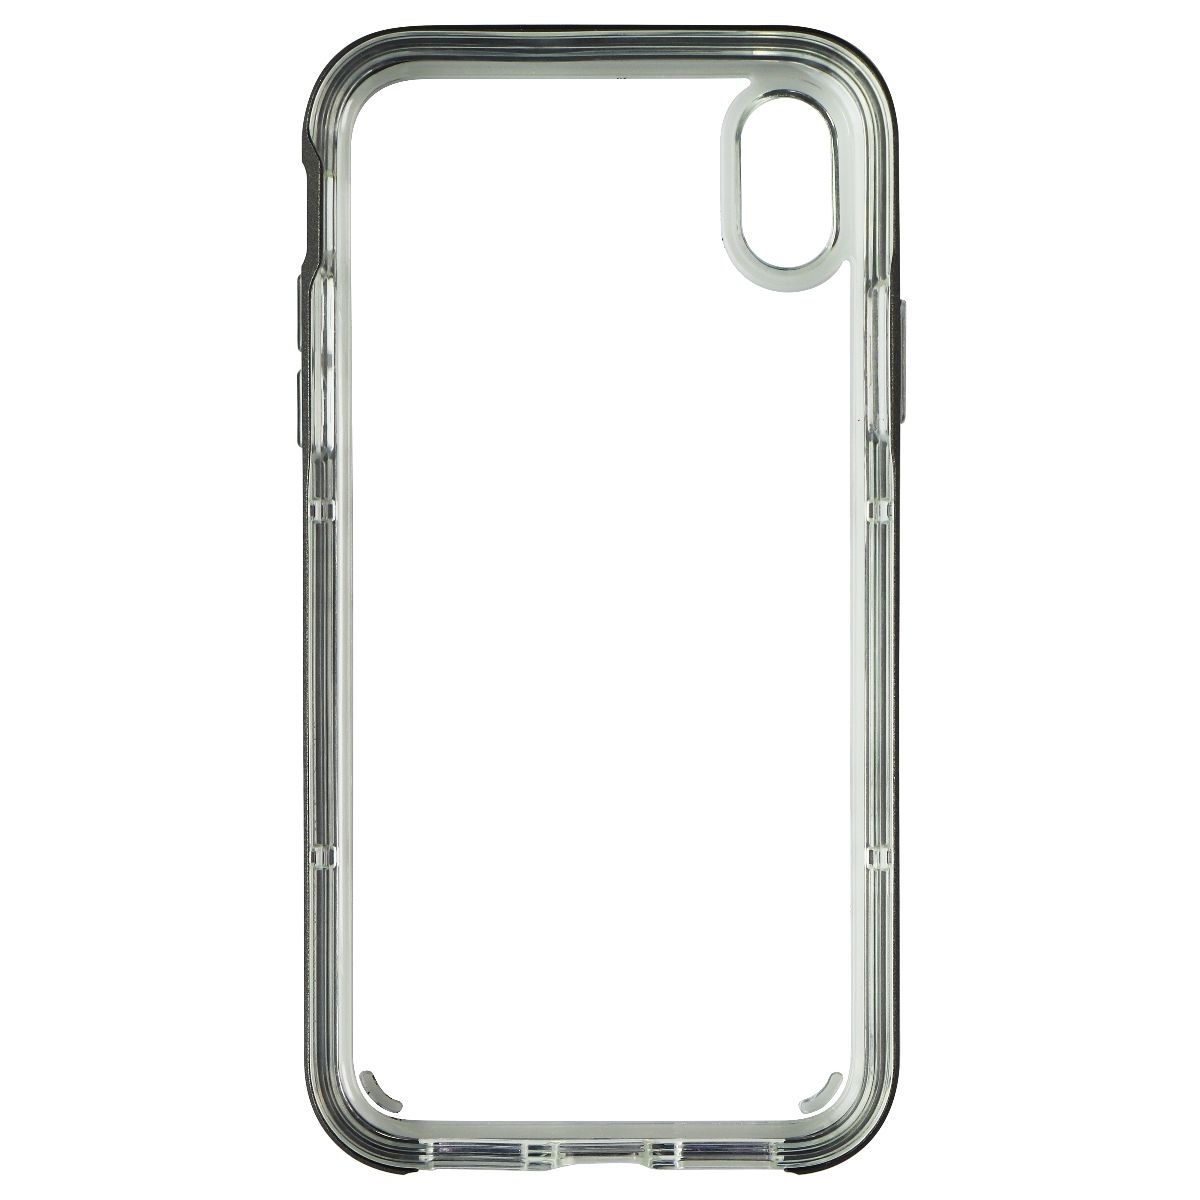 Spigen Neo Hybrid Crystal Series Case For Apple IPhone XR - Gunmetal/Clear (Refurbished)